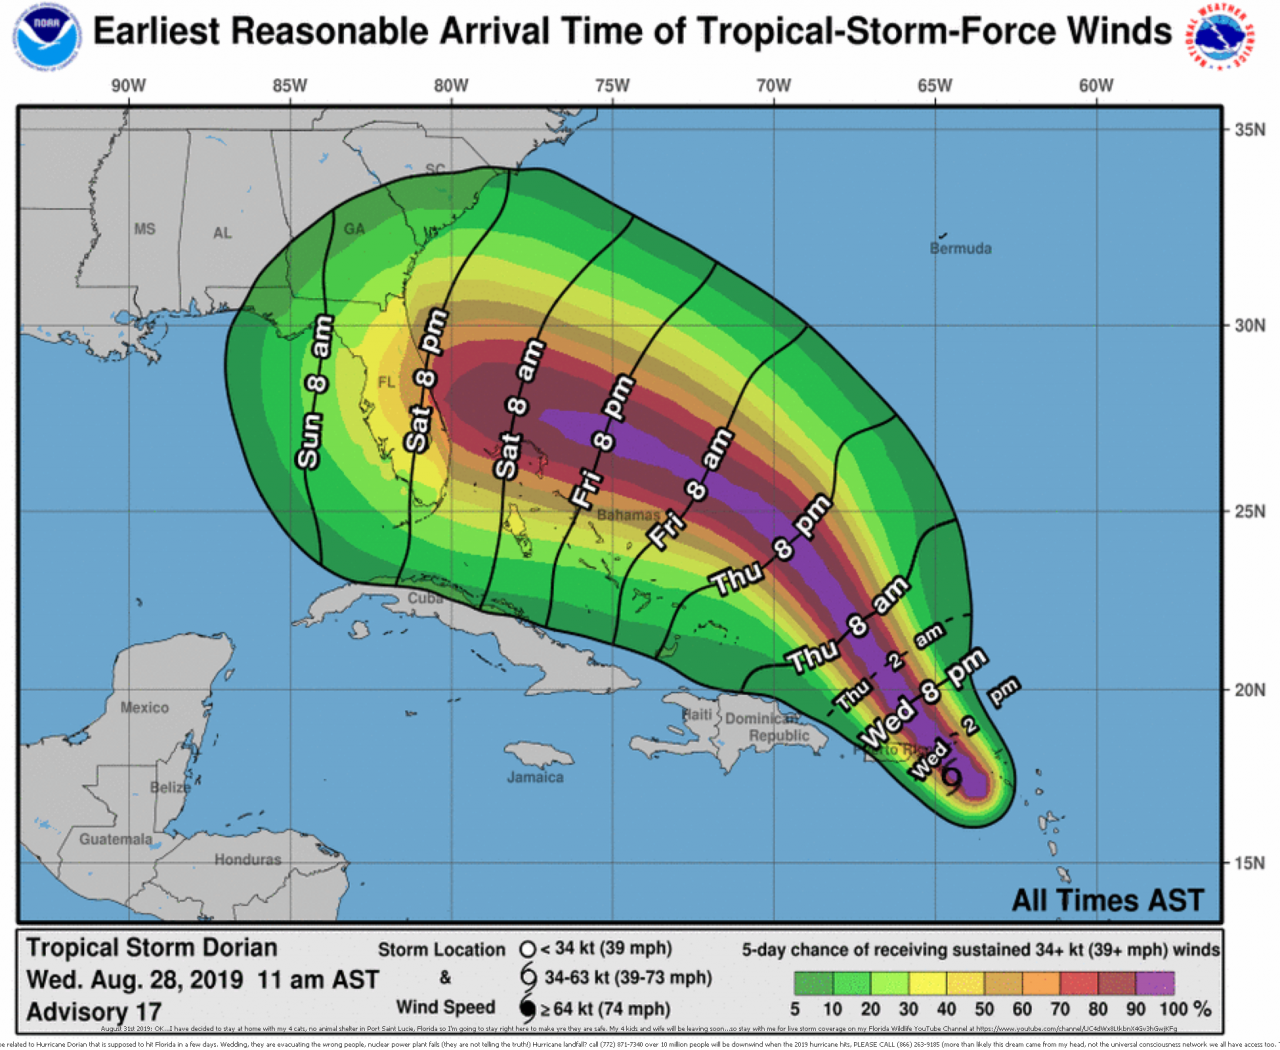 Hurricane Dorian Aug 2019 prediction by Psychic Brian Ladd 5d66bfb16d928 image
Hurricane Dorian Aug 2019 prediction by Psychic Brian Ladd 5d66bfb16d928 image
